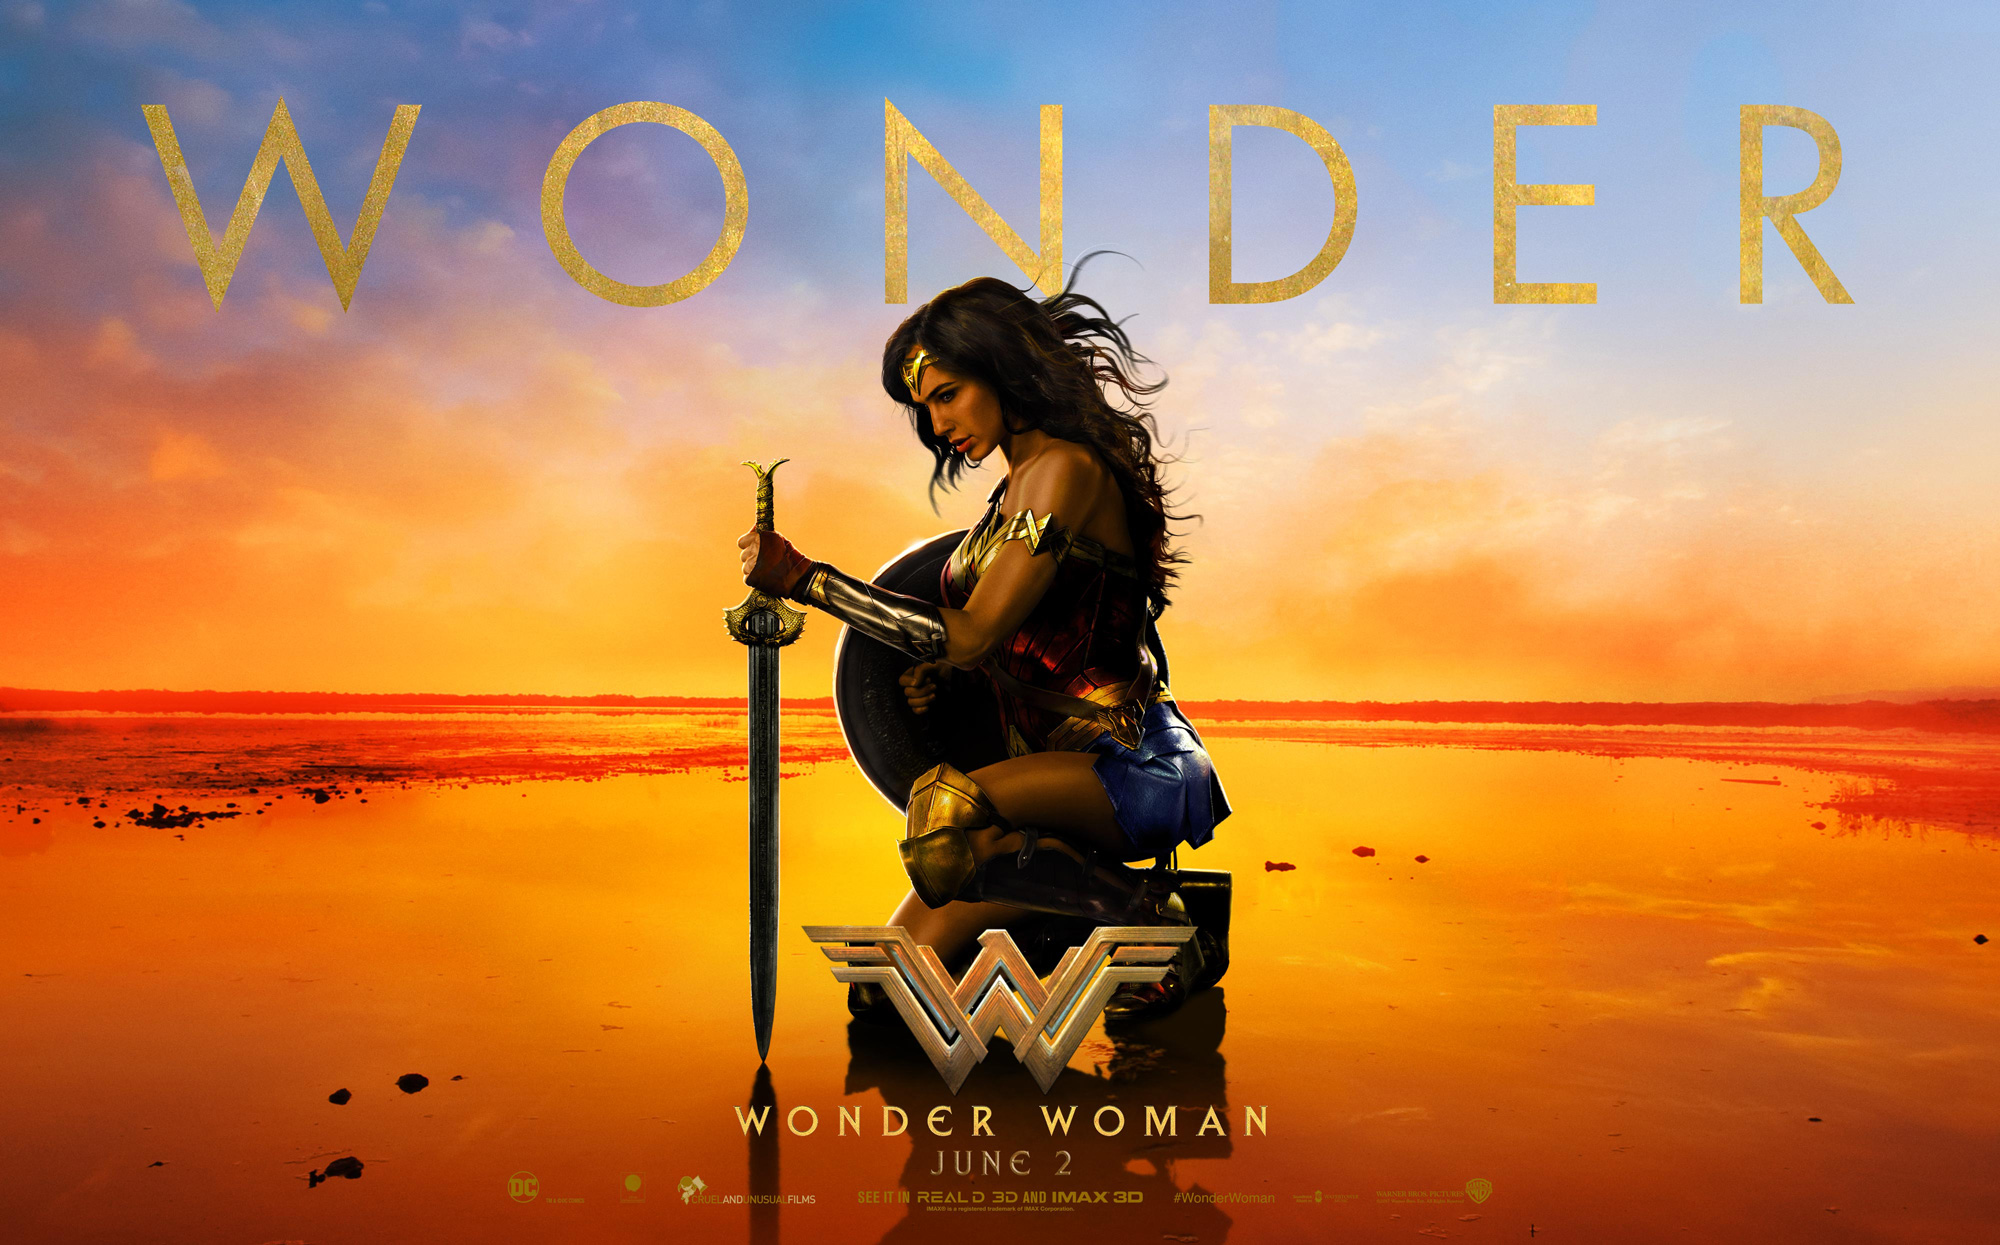 Episode 048: Wonder Woman – A Film Discussion with Mitch Birks & Martin Daniel